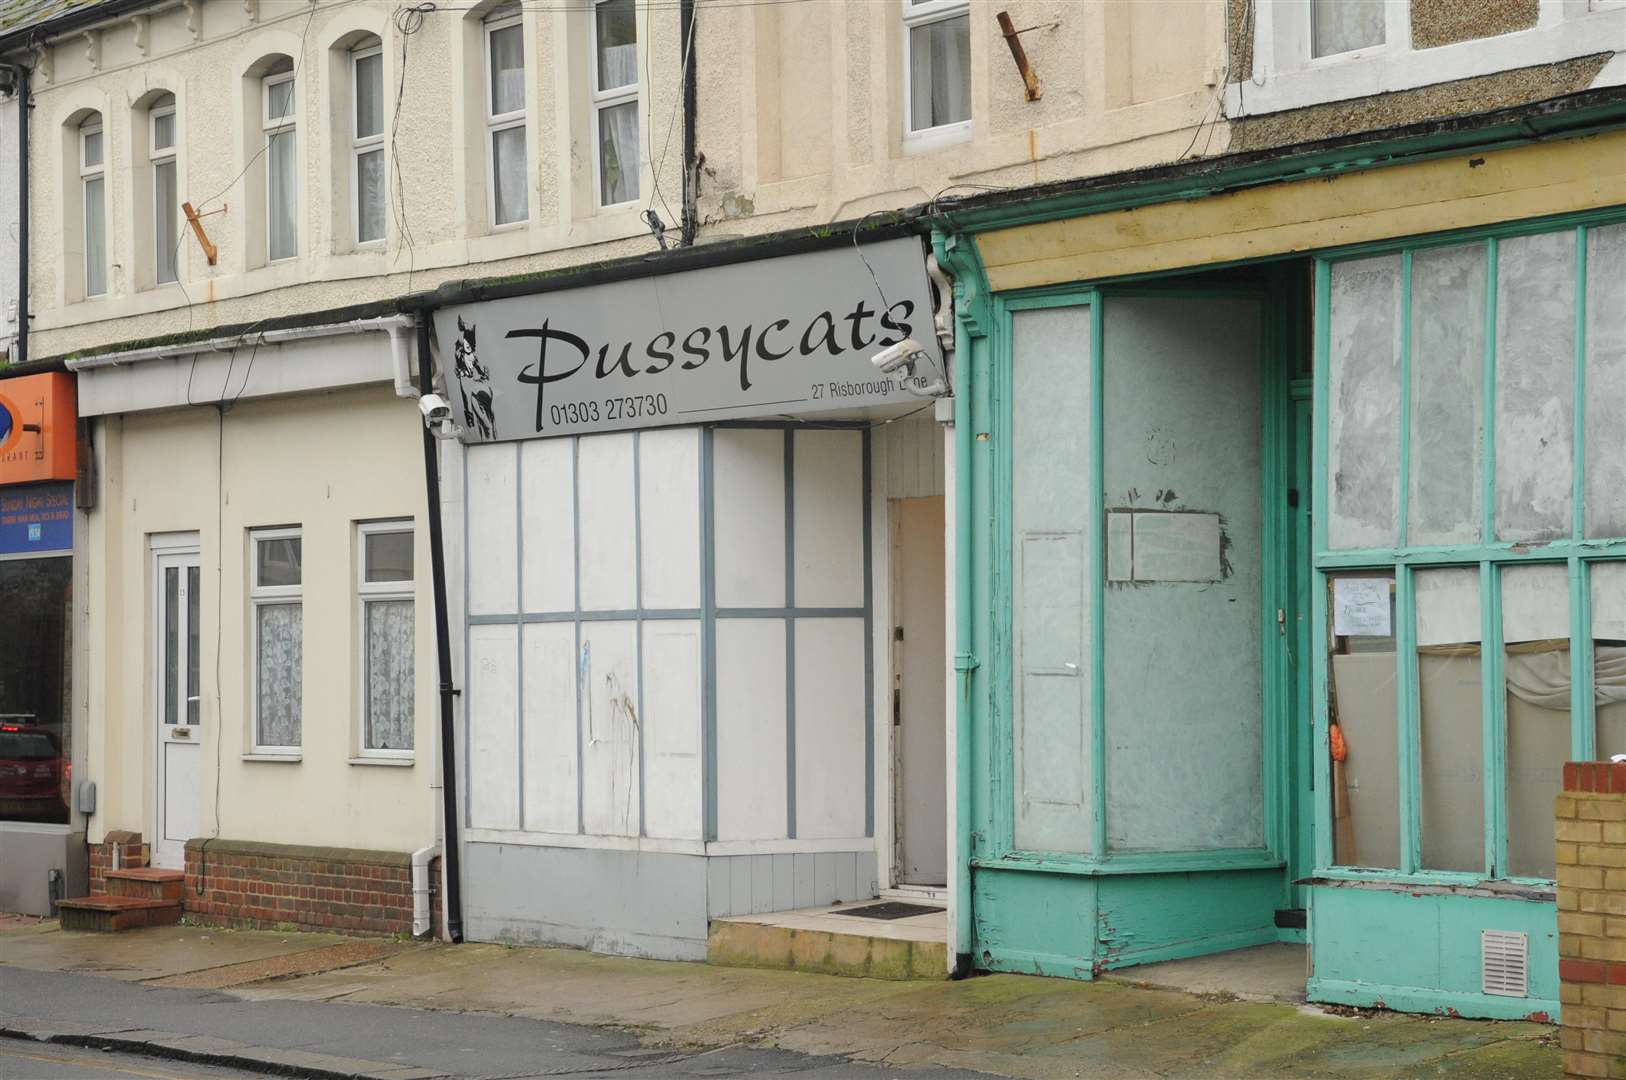 The Pussycats premises in Risborough Lane